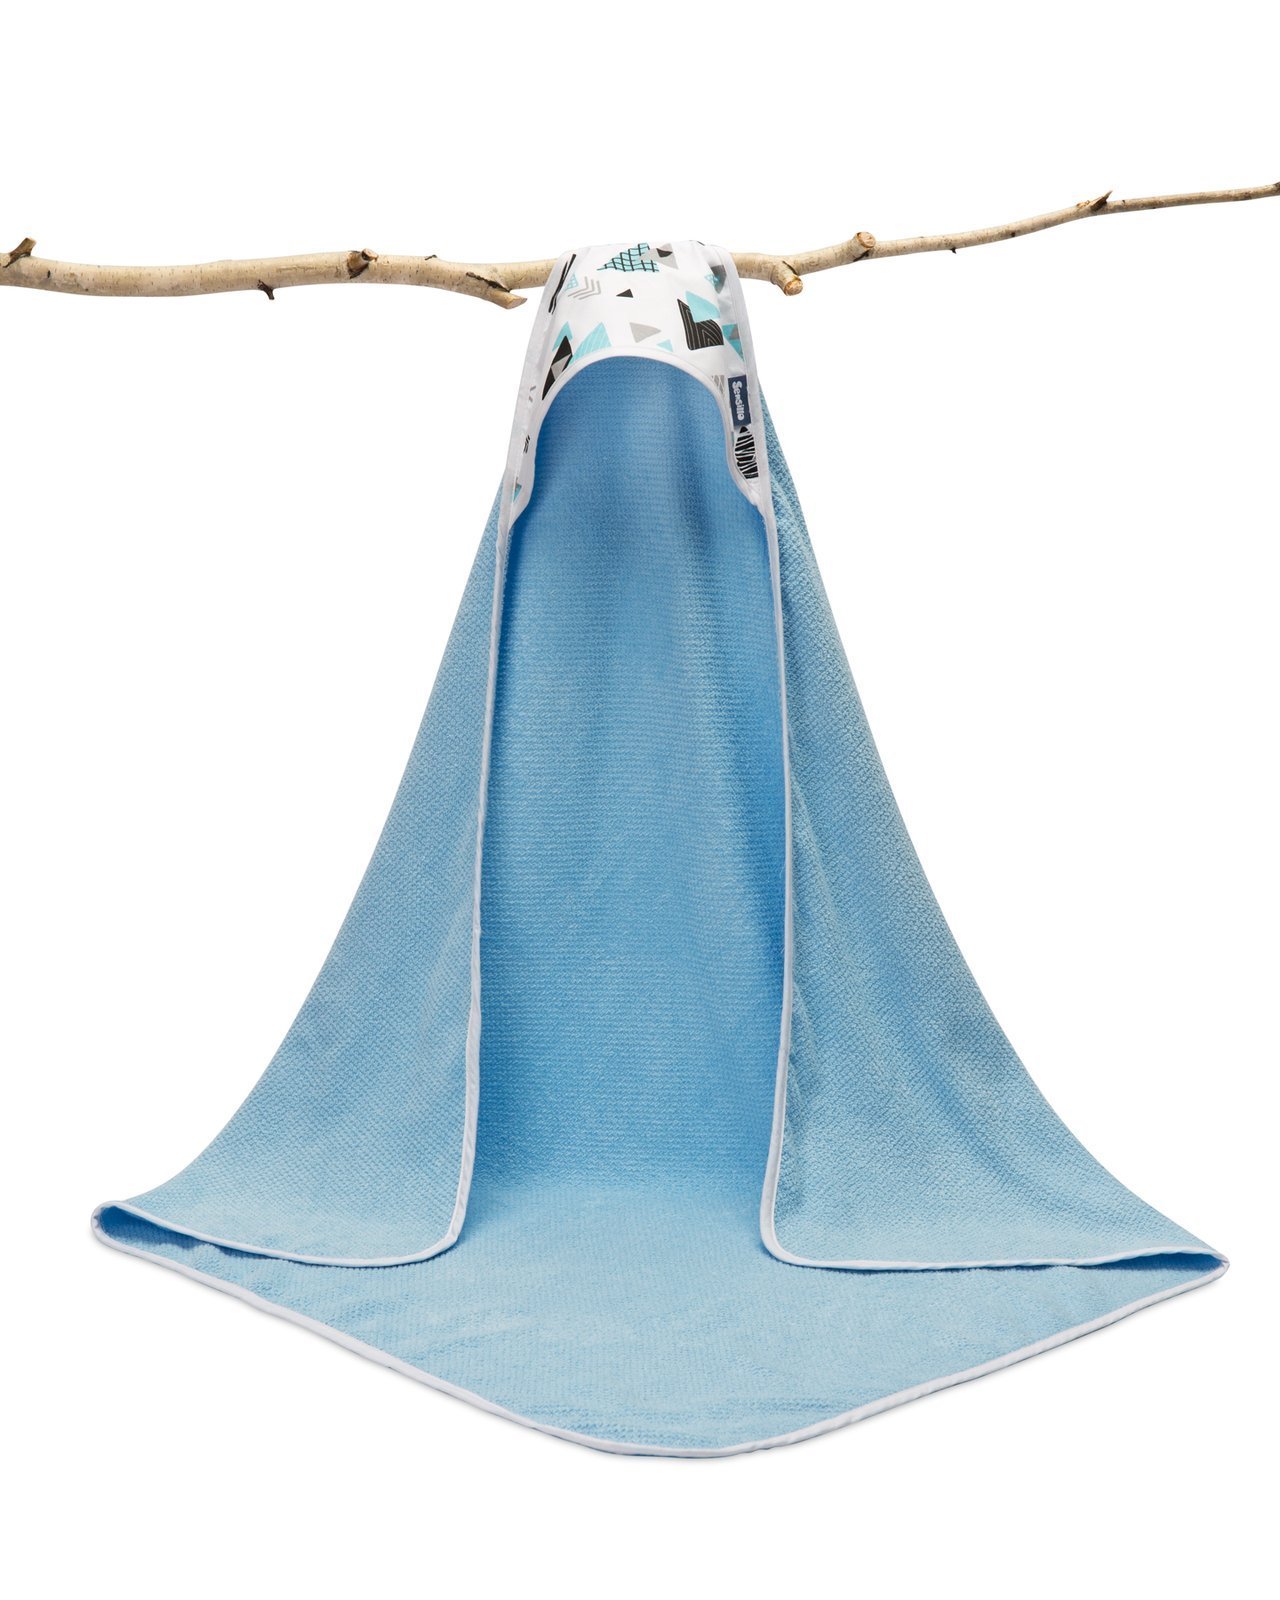 Baby Handtuch Krepp Blau 100x100 cm - Sensillo